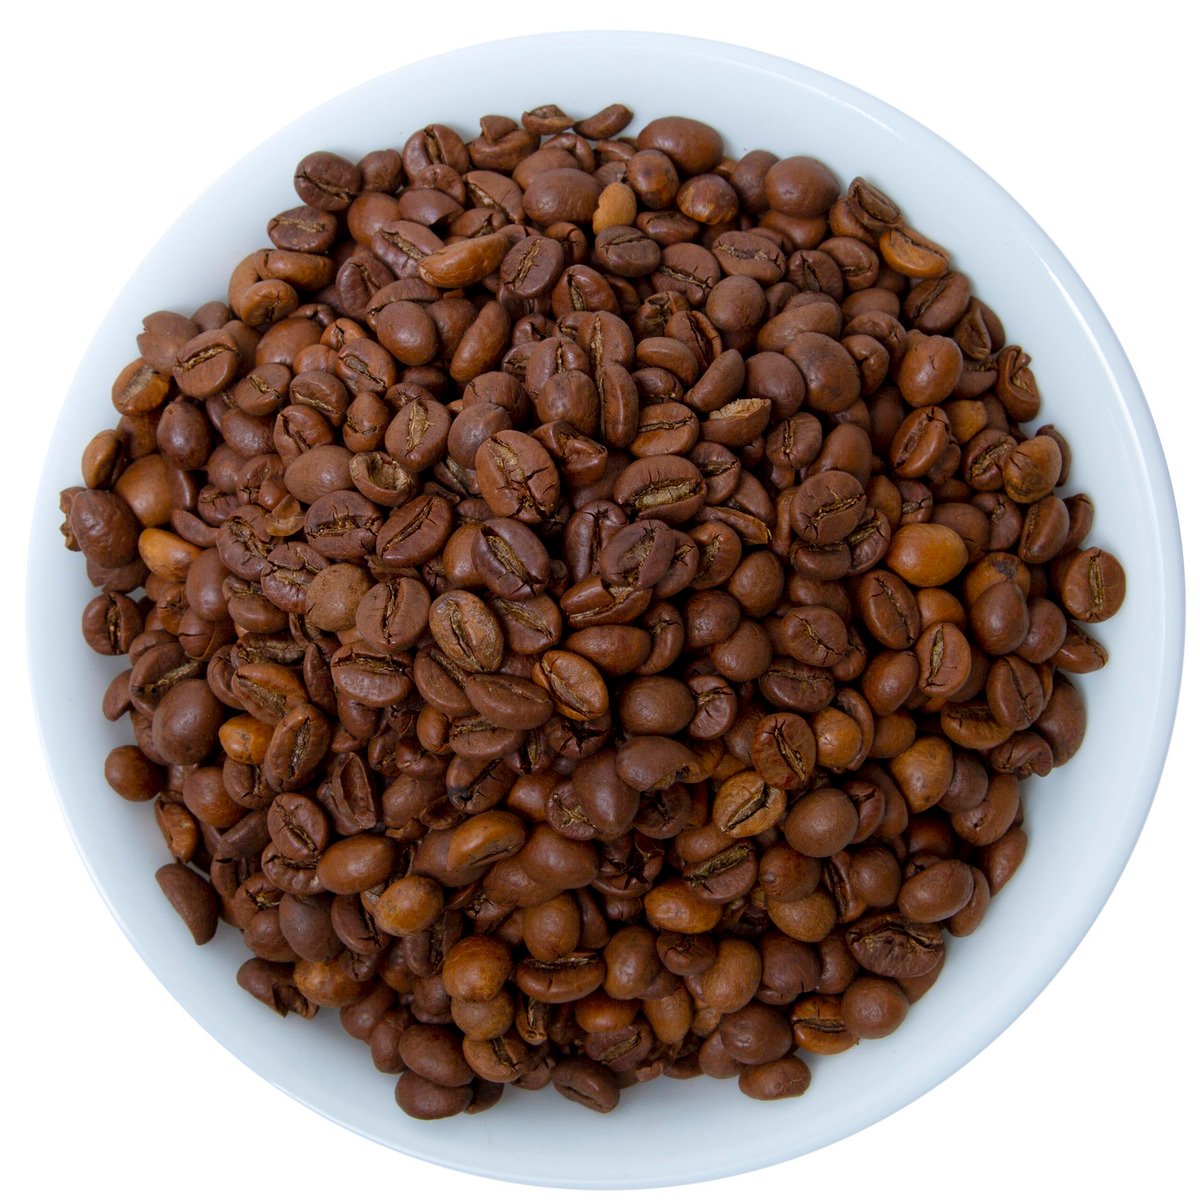 Coffee Medium Grind  500g